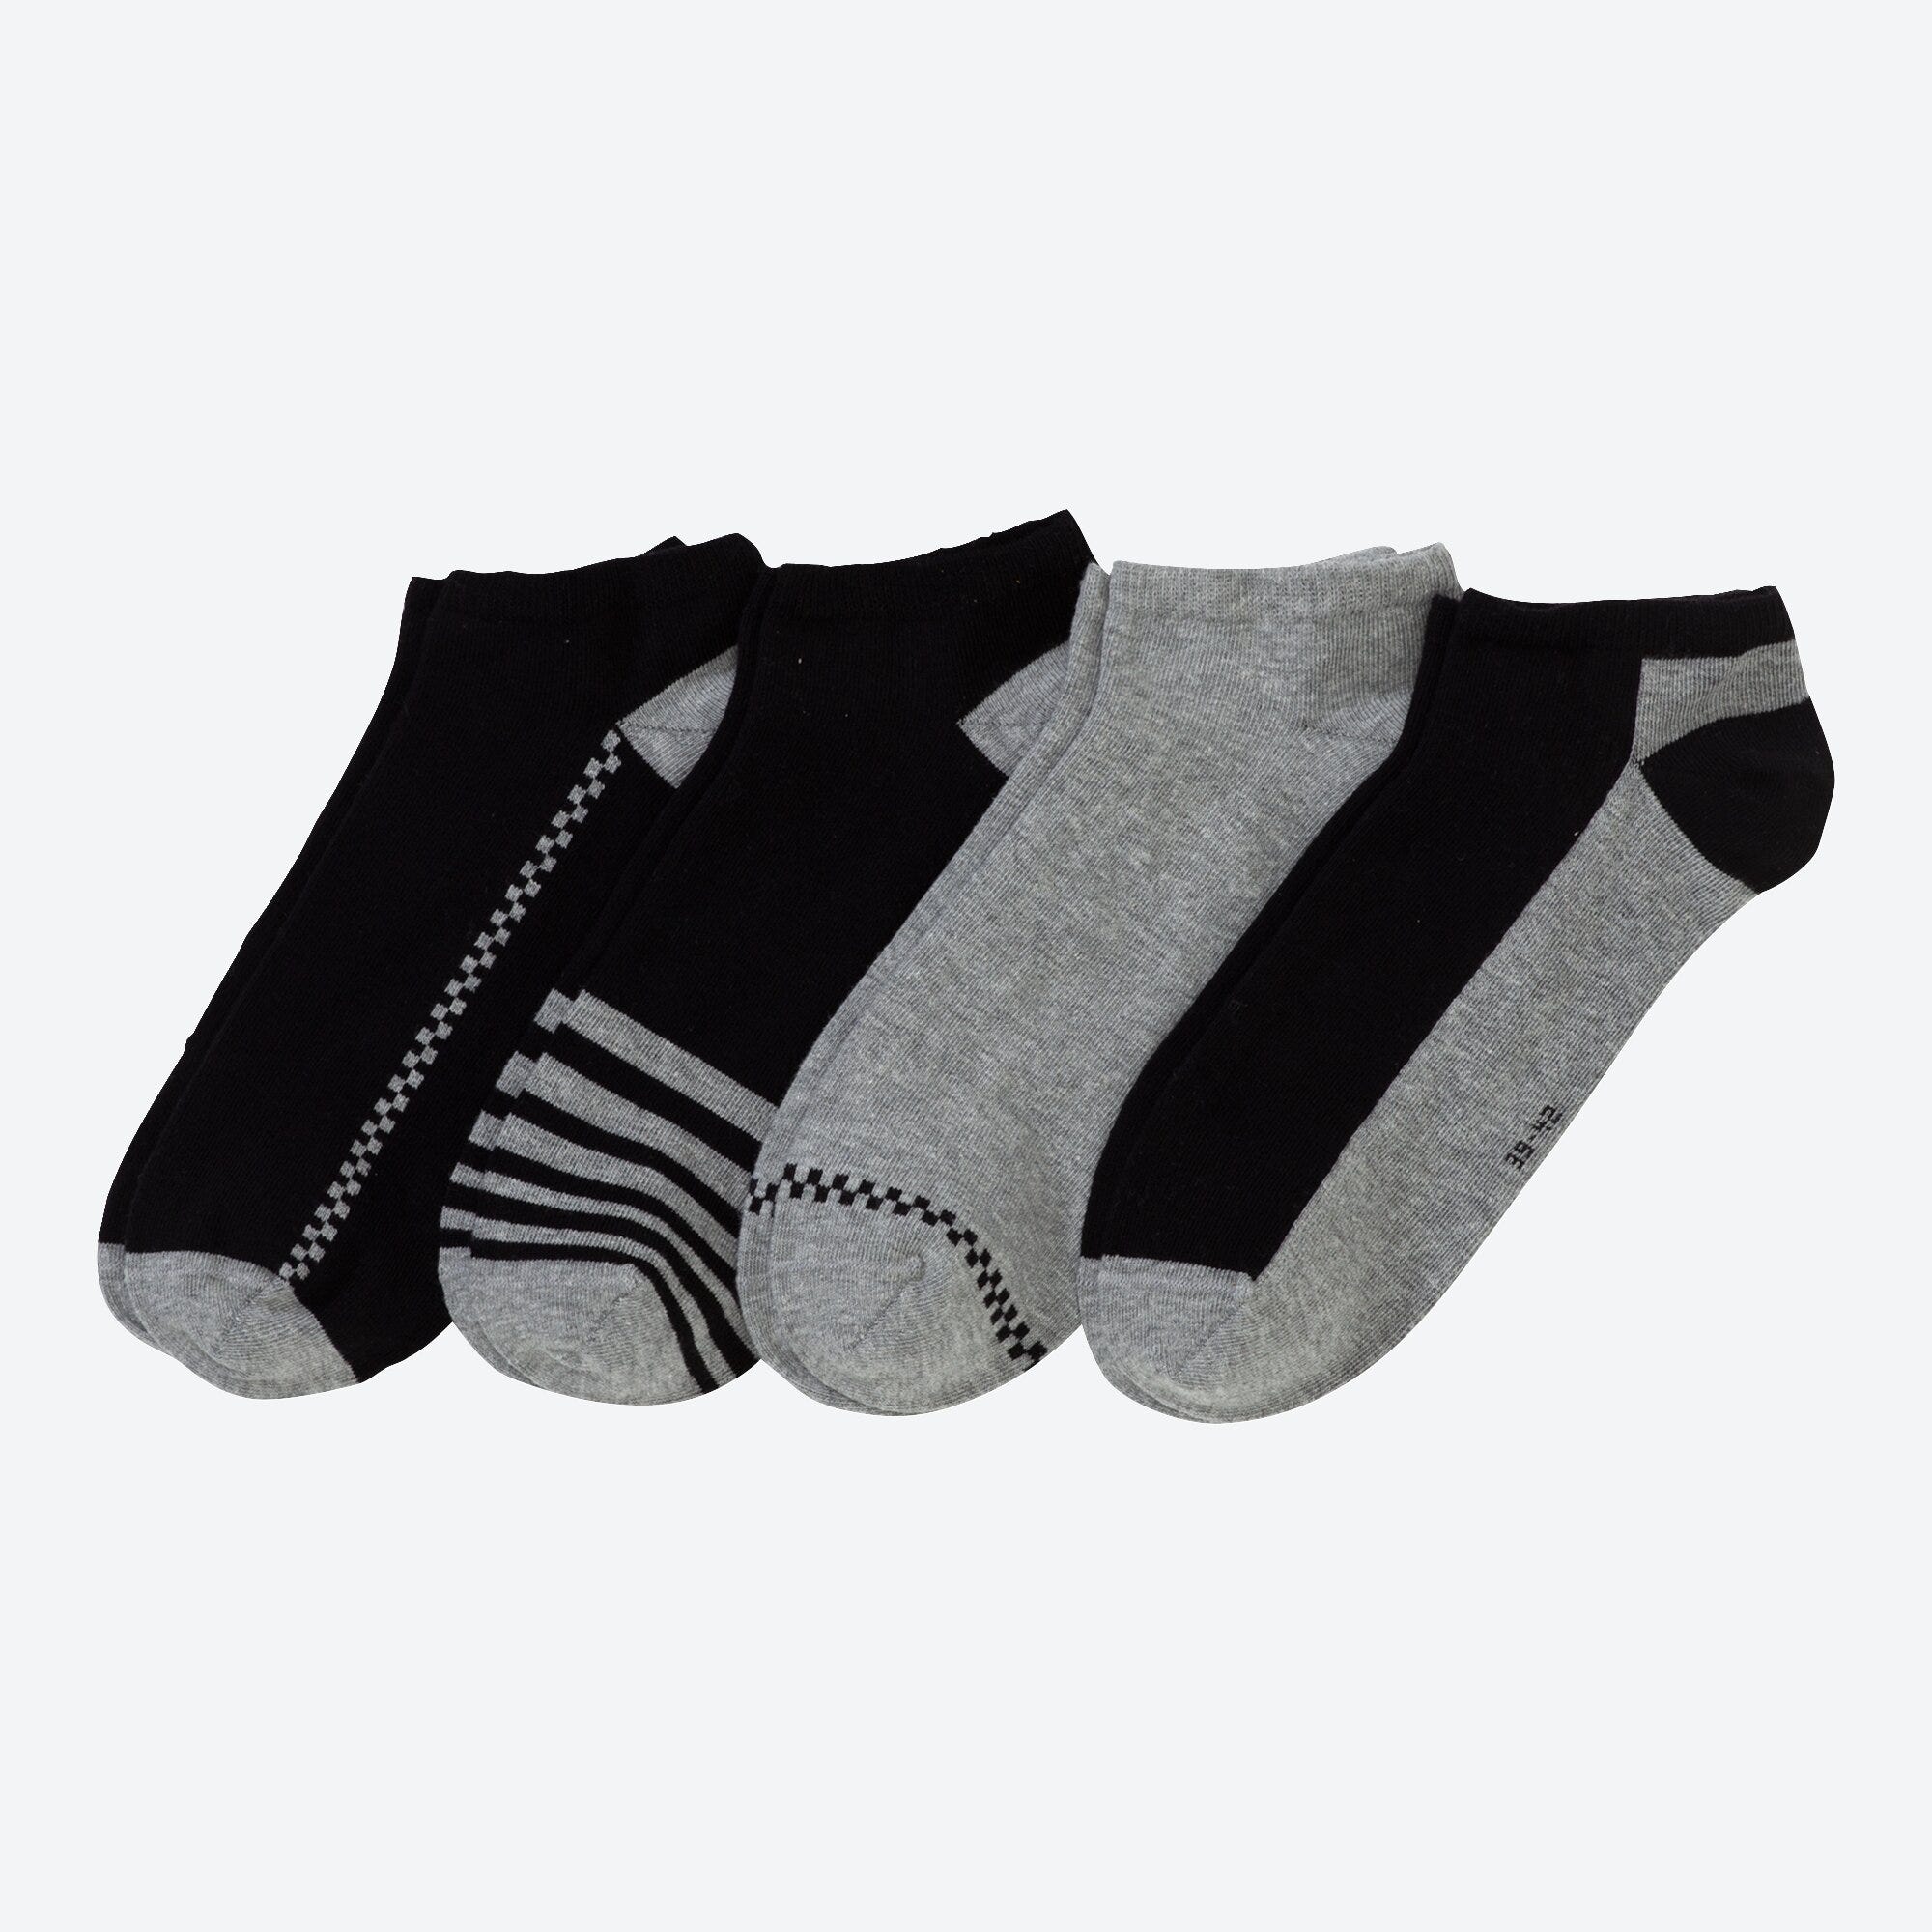 Herren-Sneaker-Socken mit Kontrast-Design, 4er-Pack